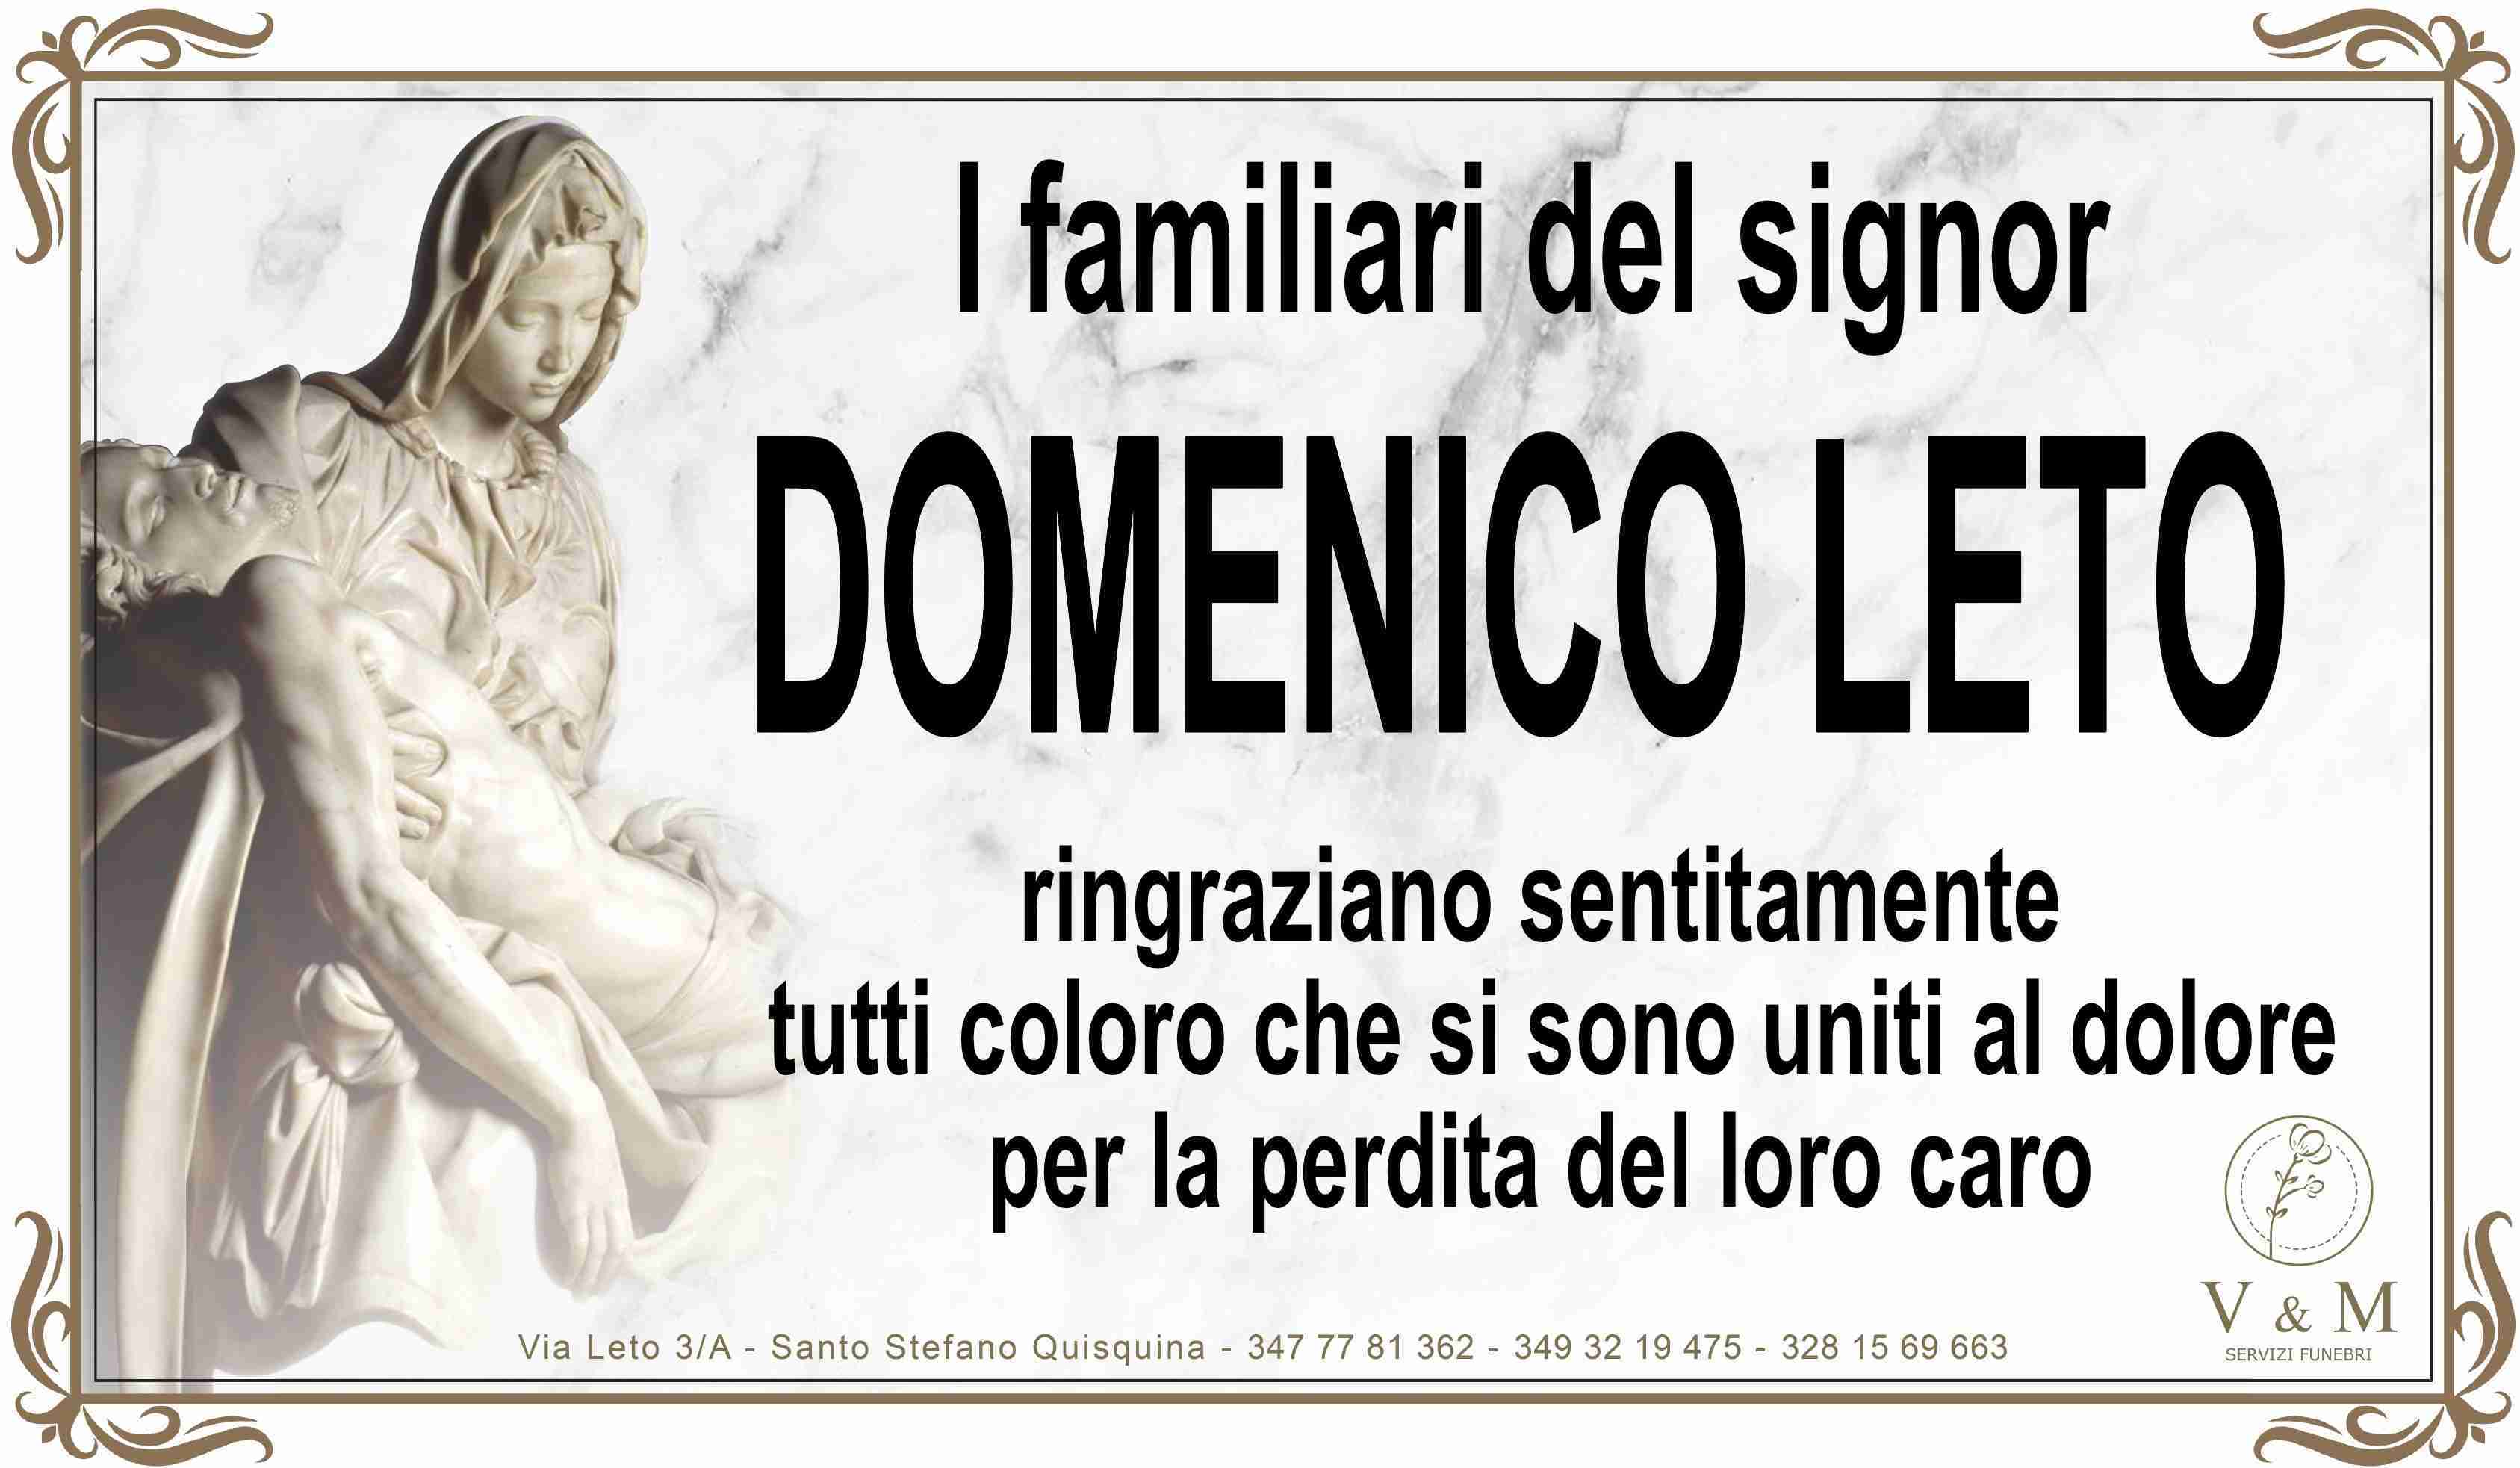 Domenico Leto